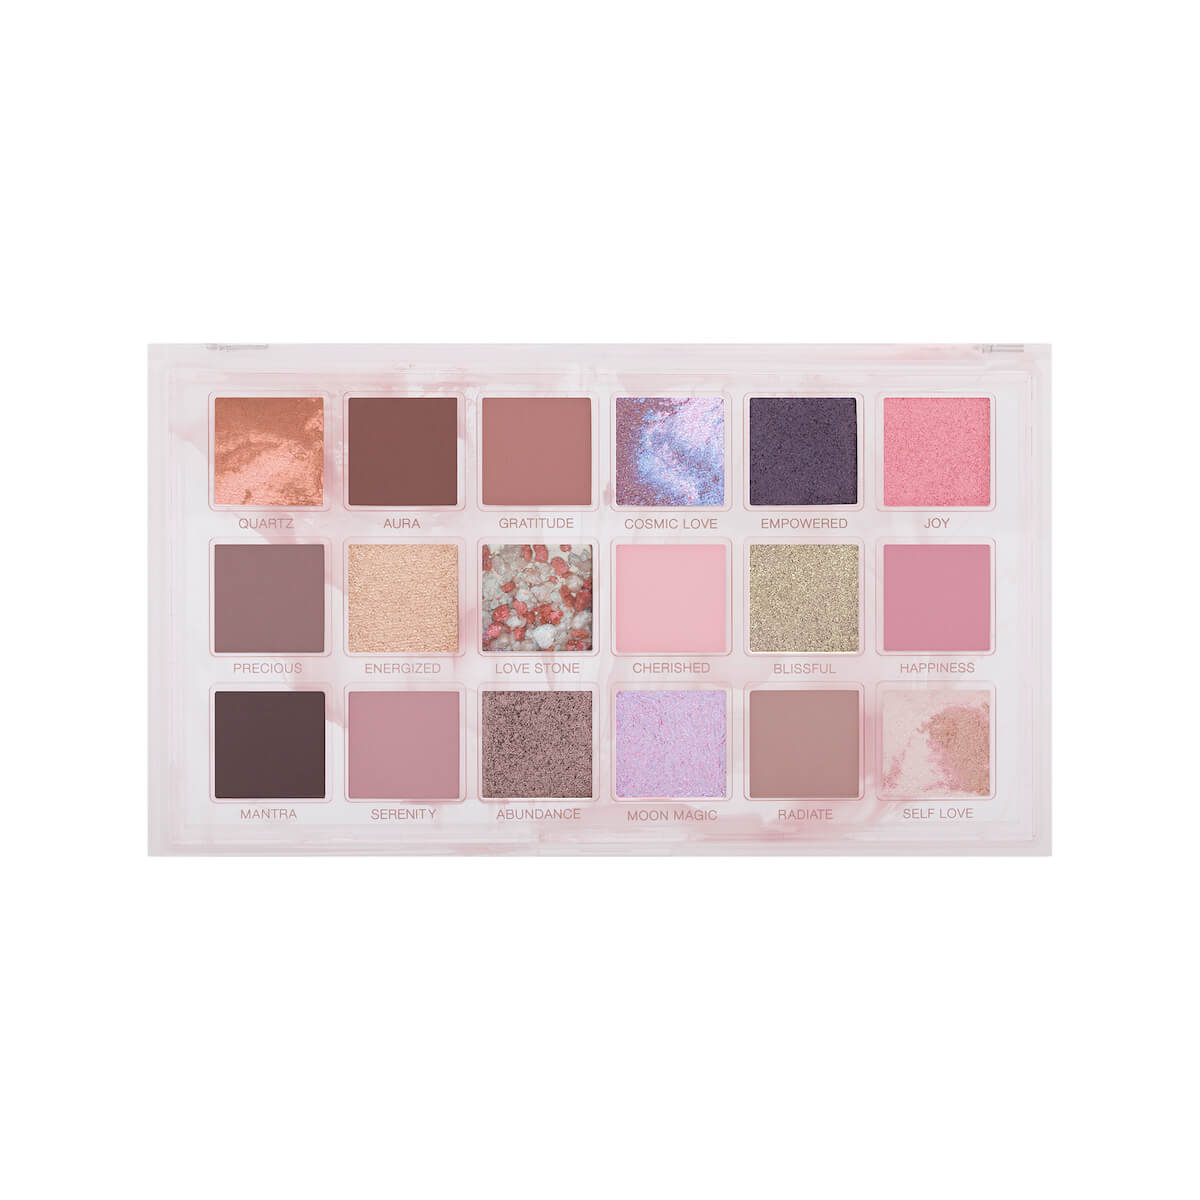 rose quartz eyeshadow palette (paleta de sombras para ojos)